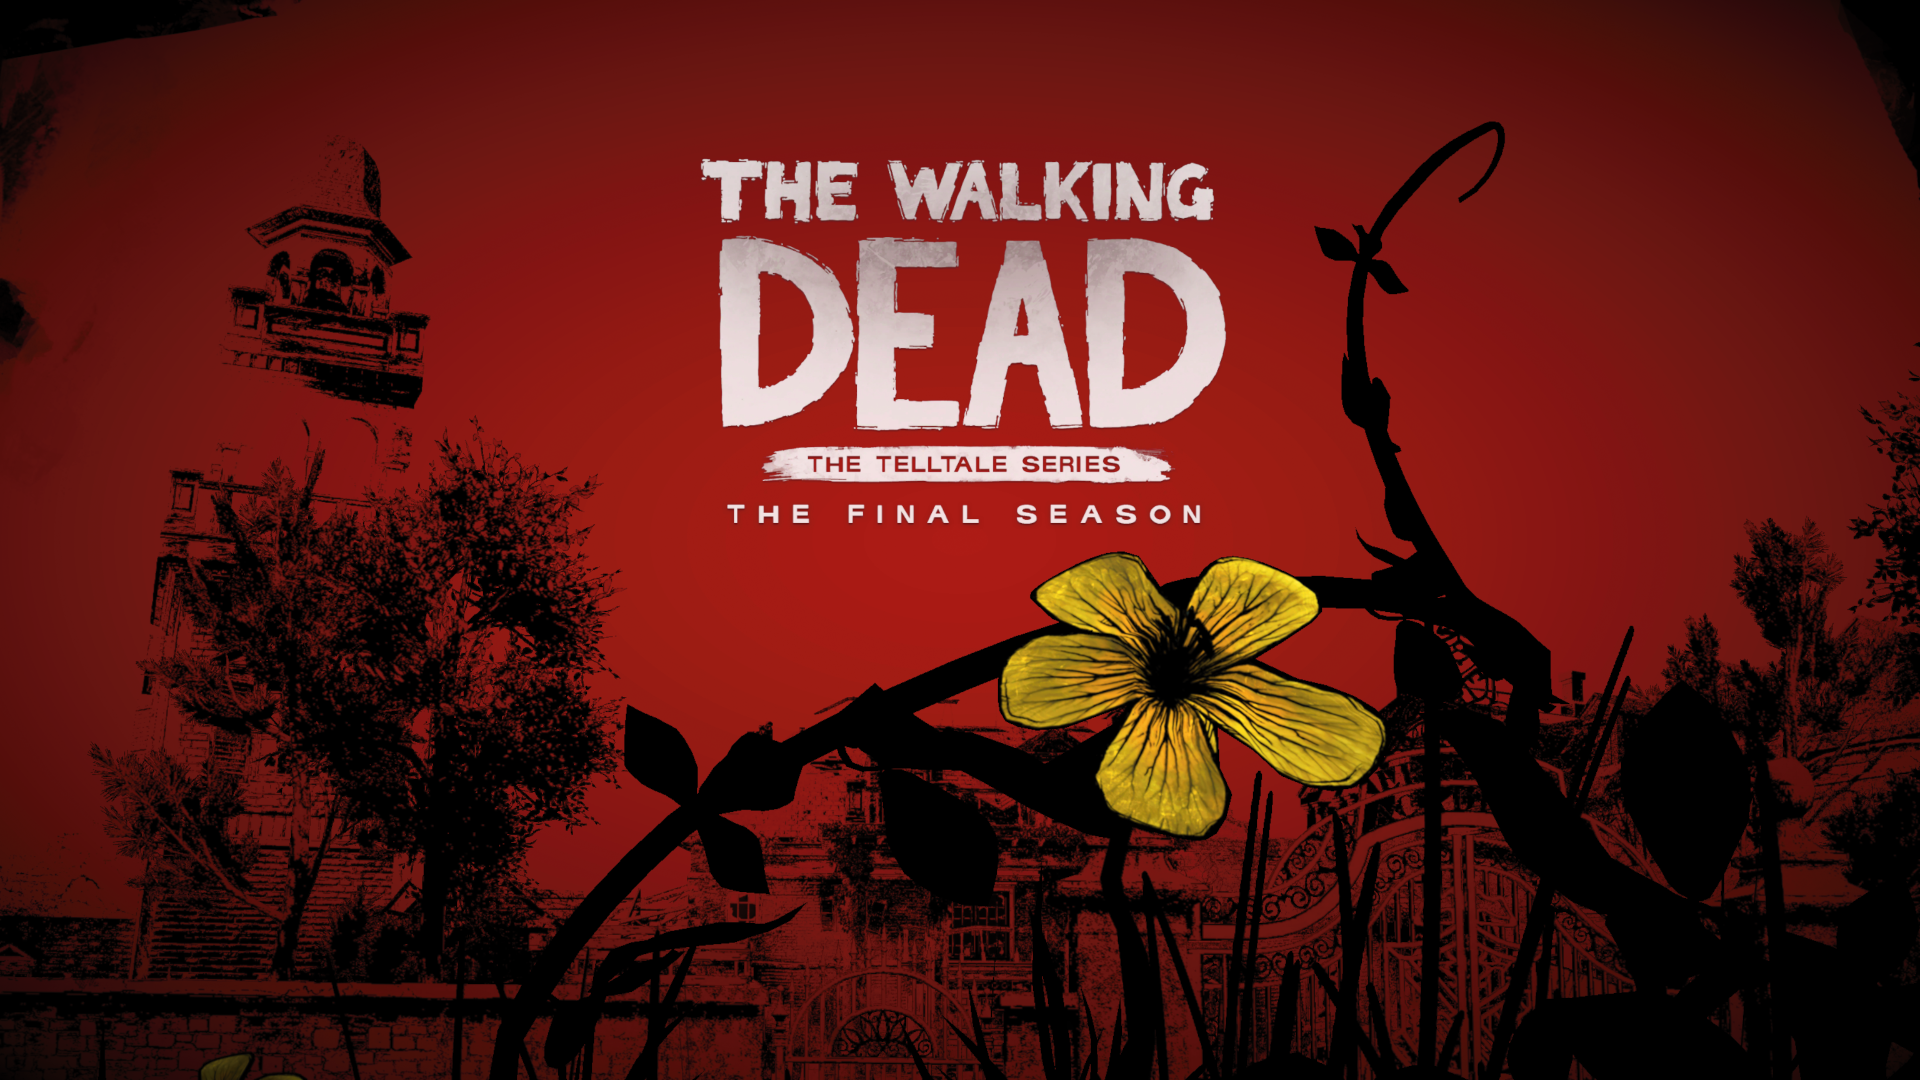 The Walking Dead - The Final Season Episode 1 Review #5